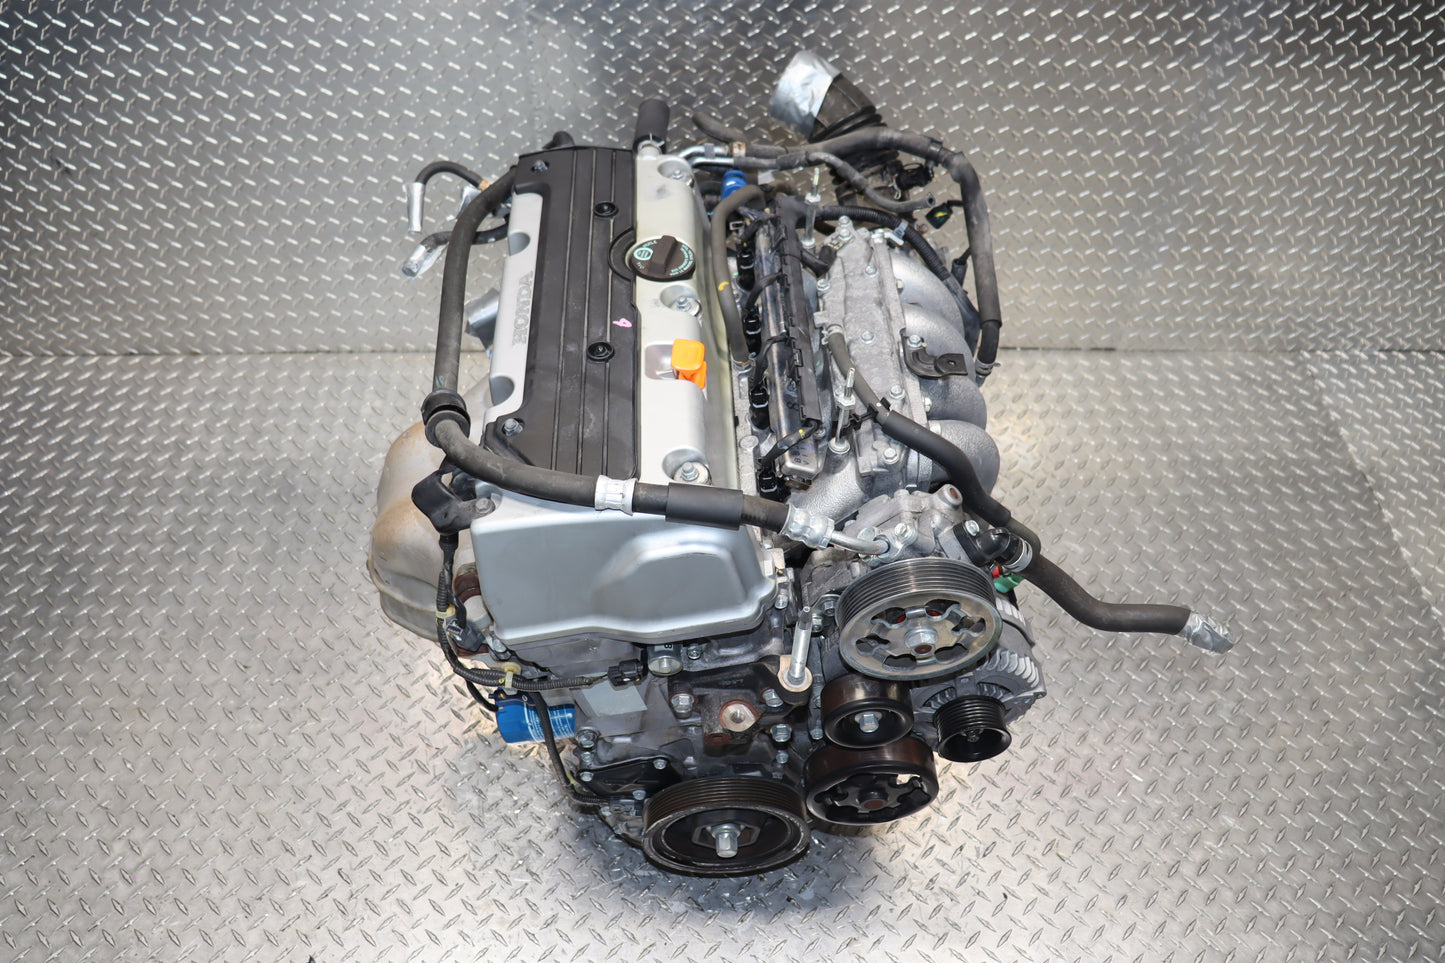 JDM K24A 04-06 RBB 2.4L i-VTEC DOHC Acura TSX ENGINE